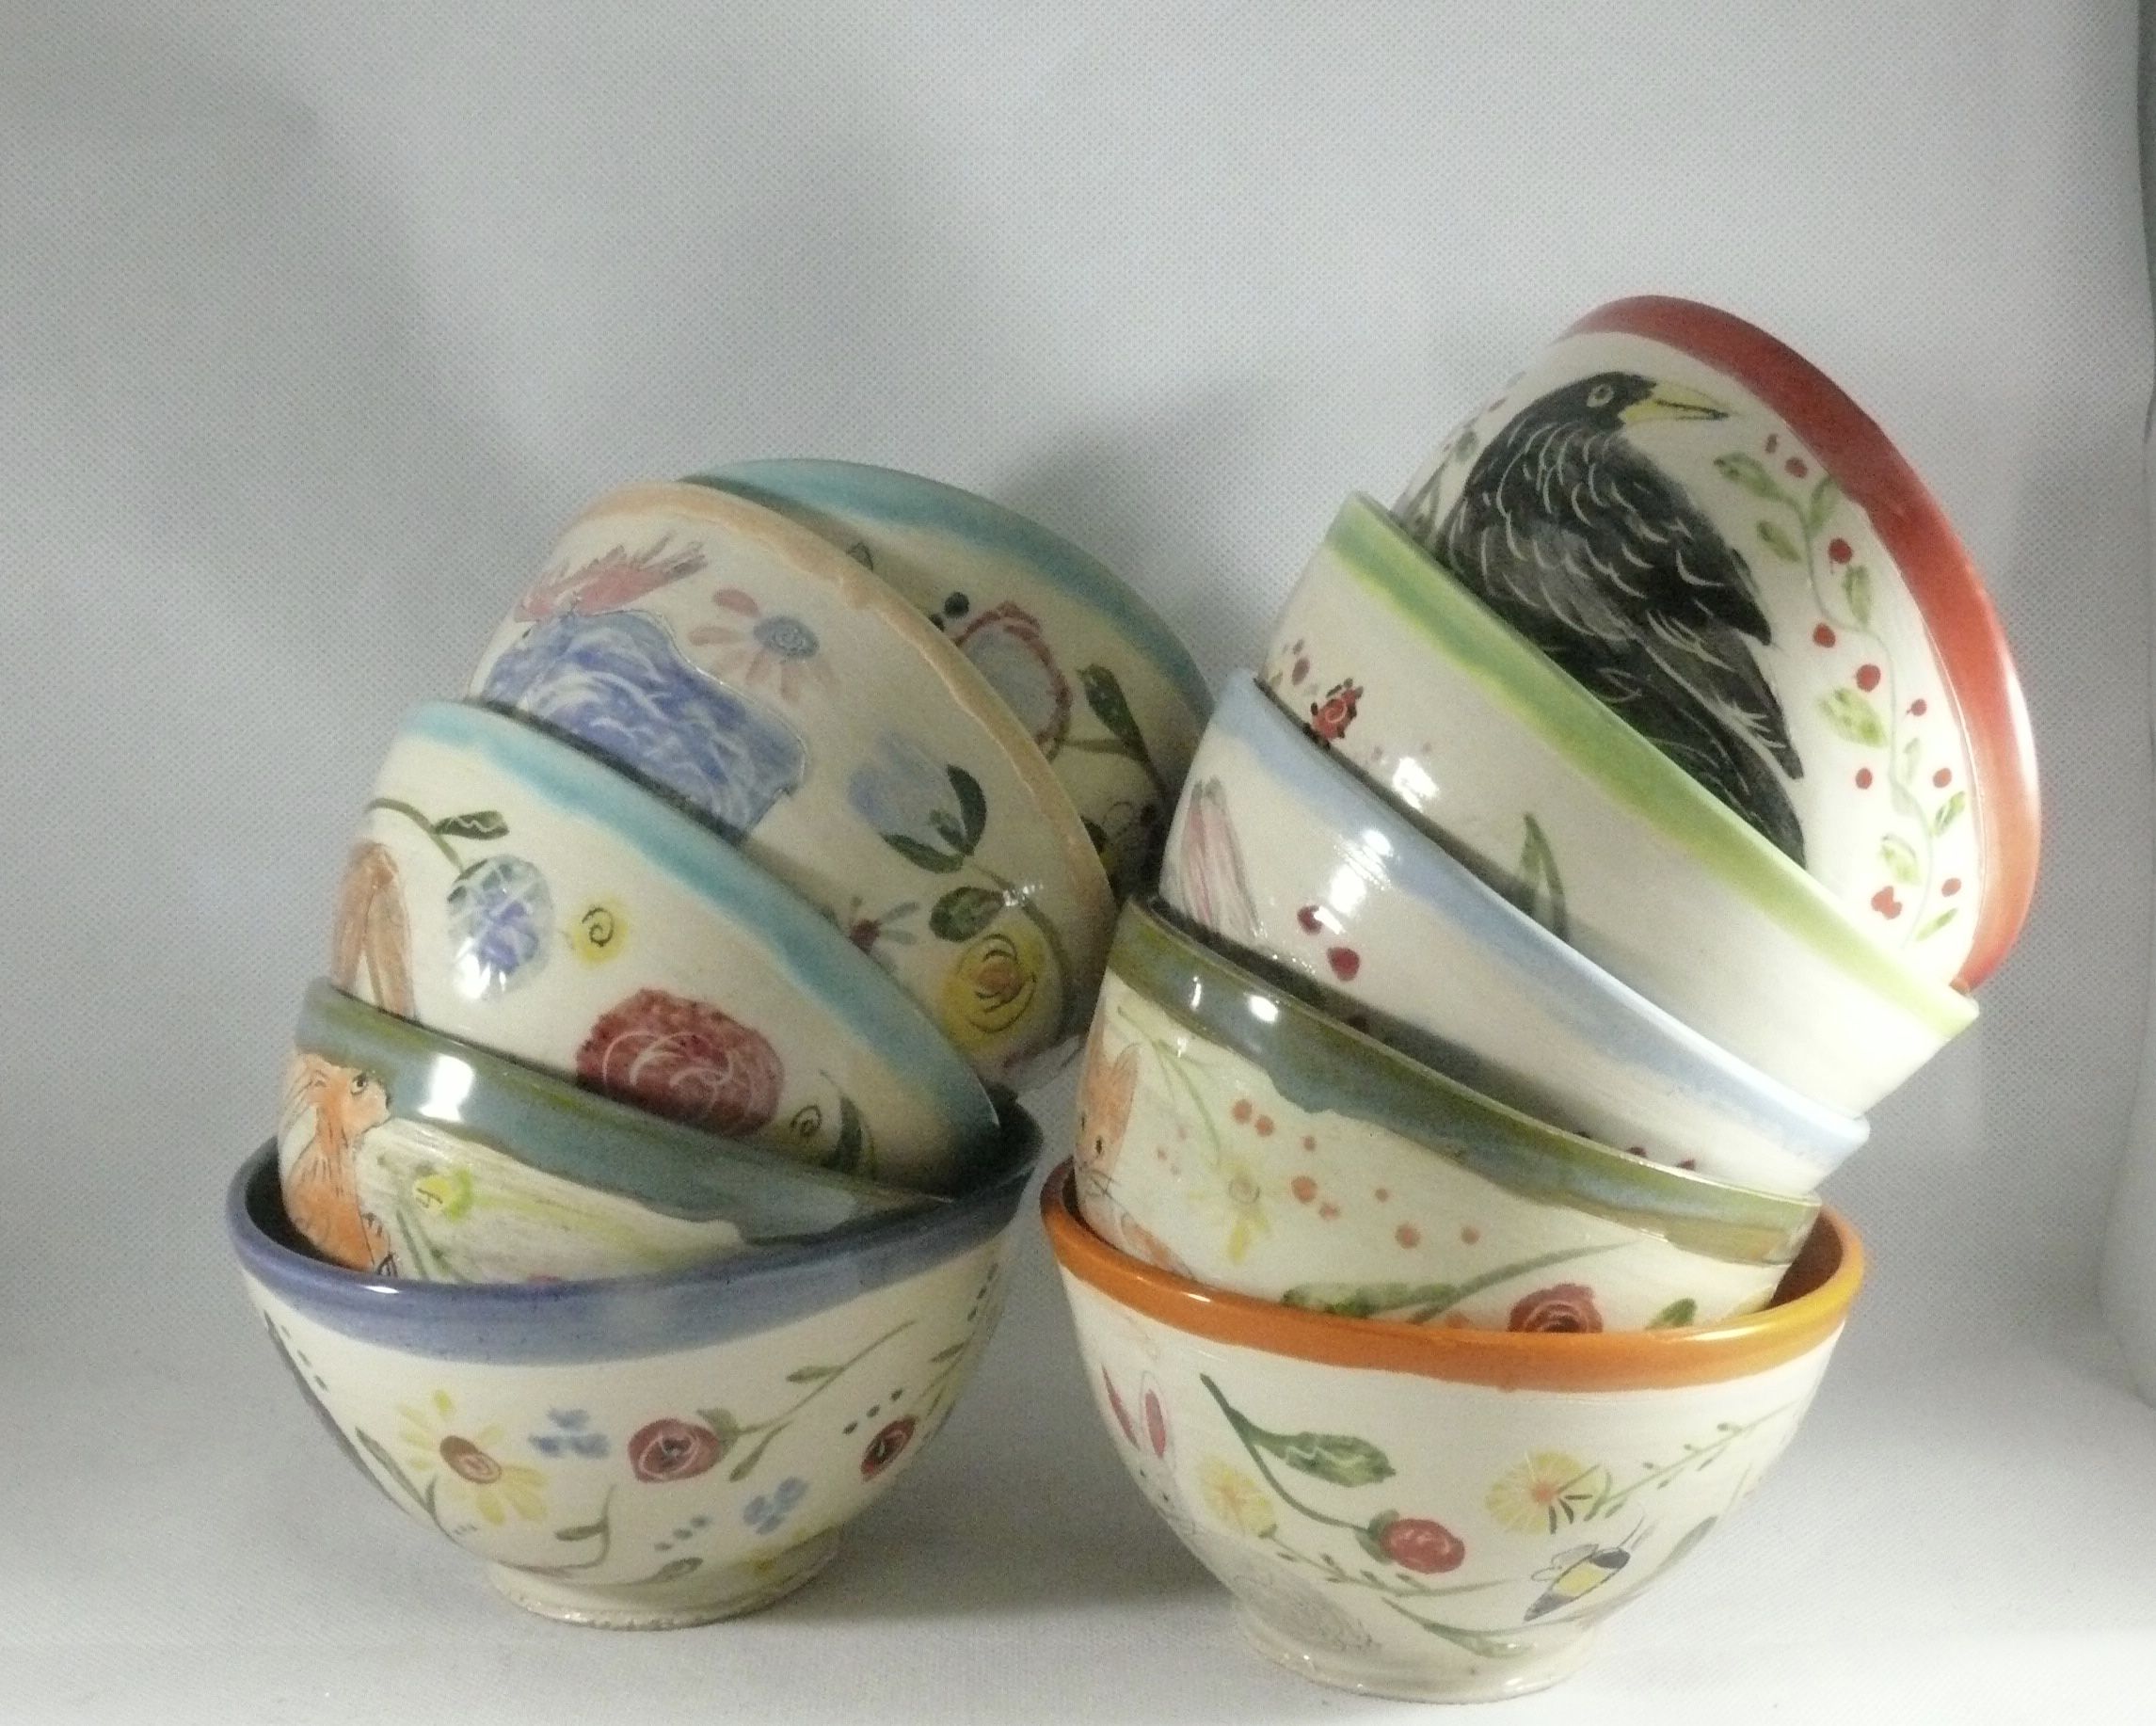 Made to order Handmade bowls